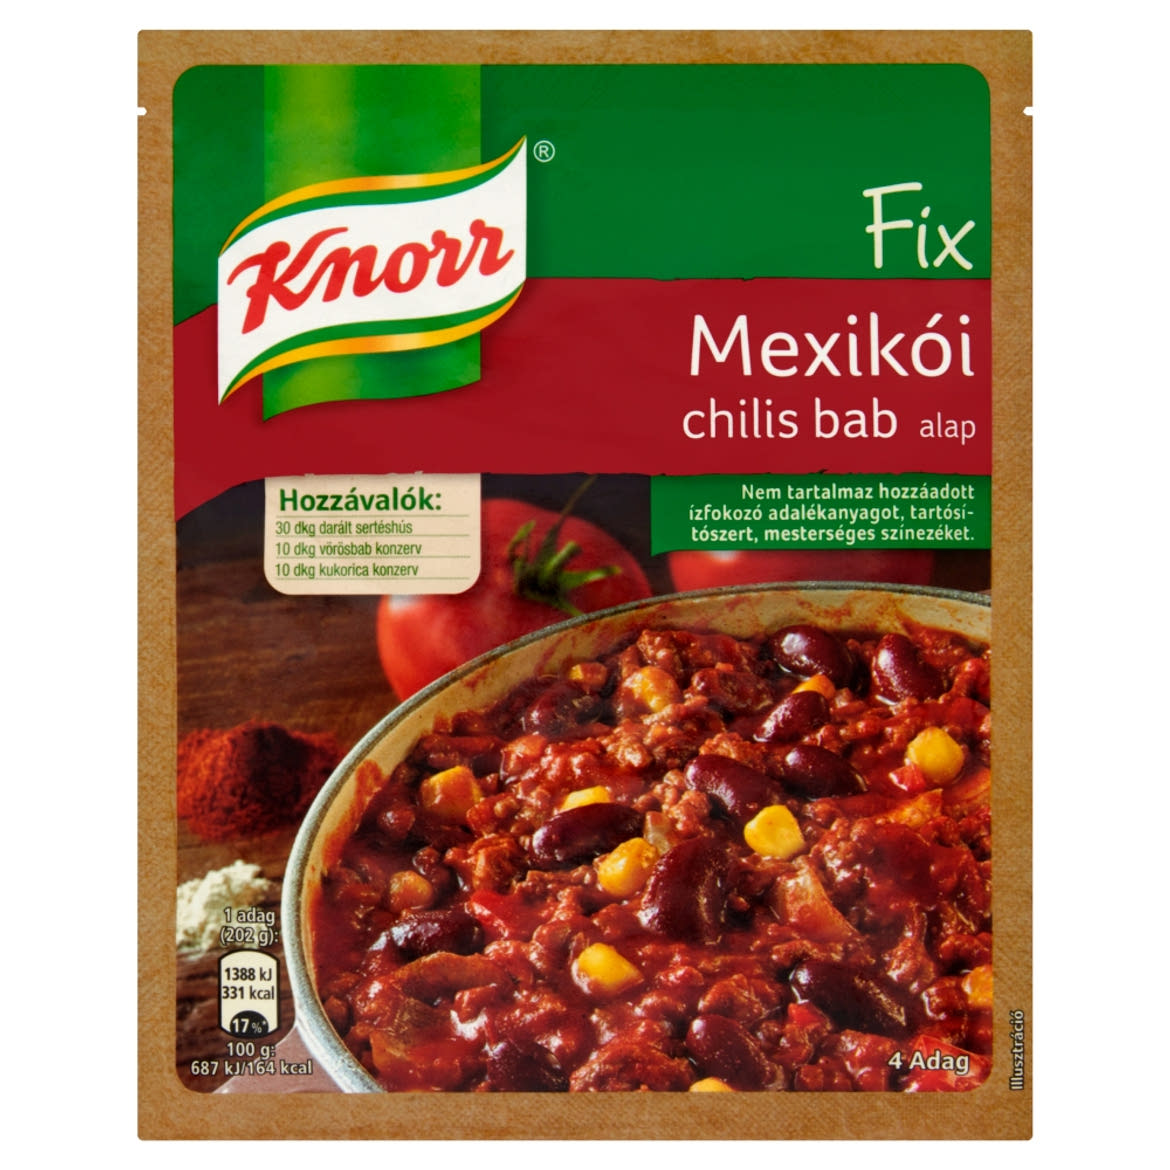 Knorr Fix mexikói chilis bab alap